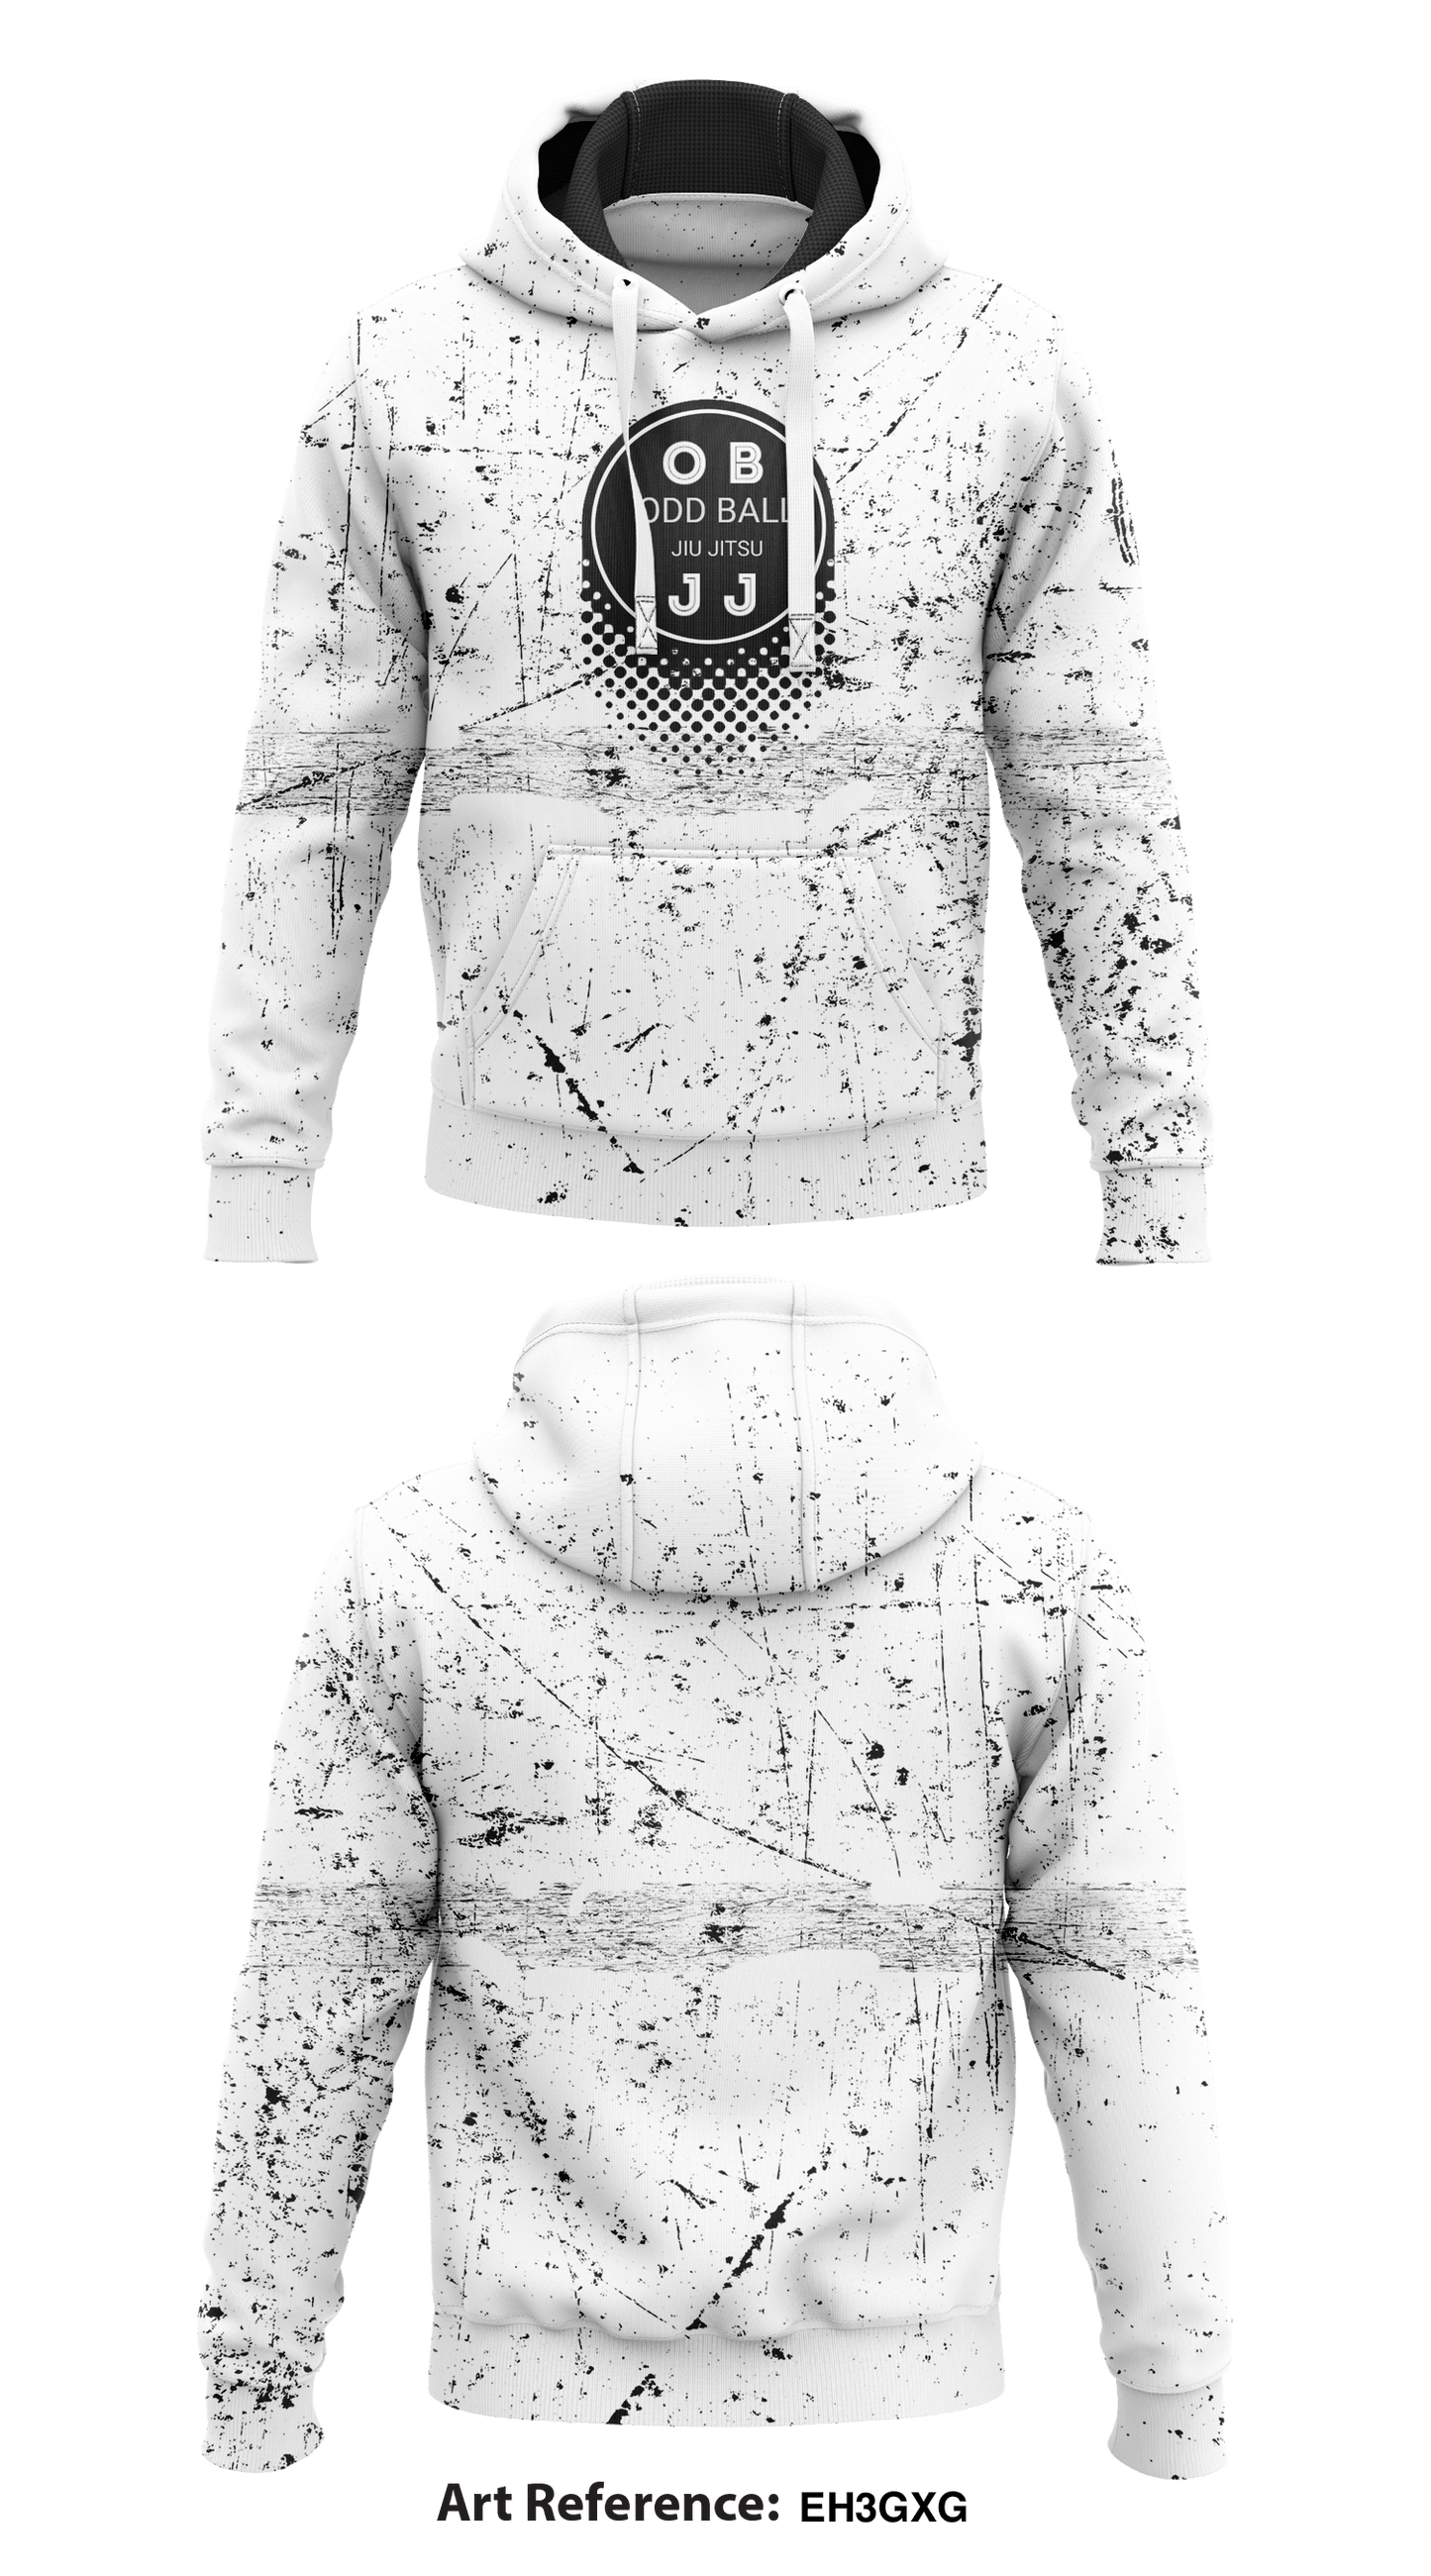 OddBall Jiu Jitsu Store 2  Core Men's Hooded Performance Sweatshirt - eH3gxg